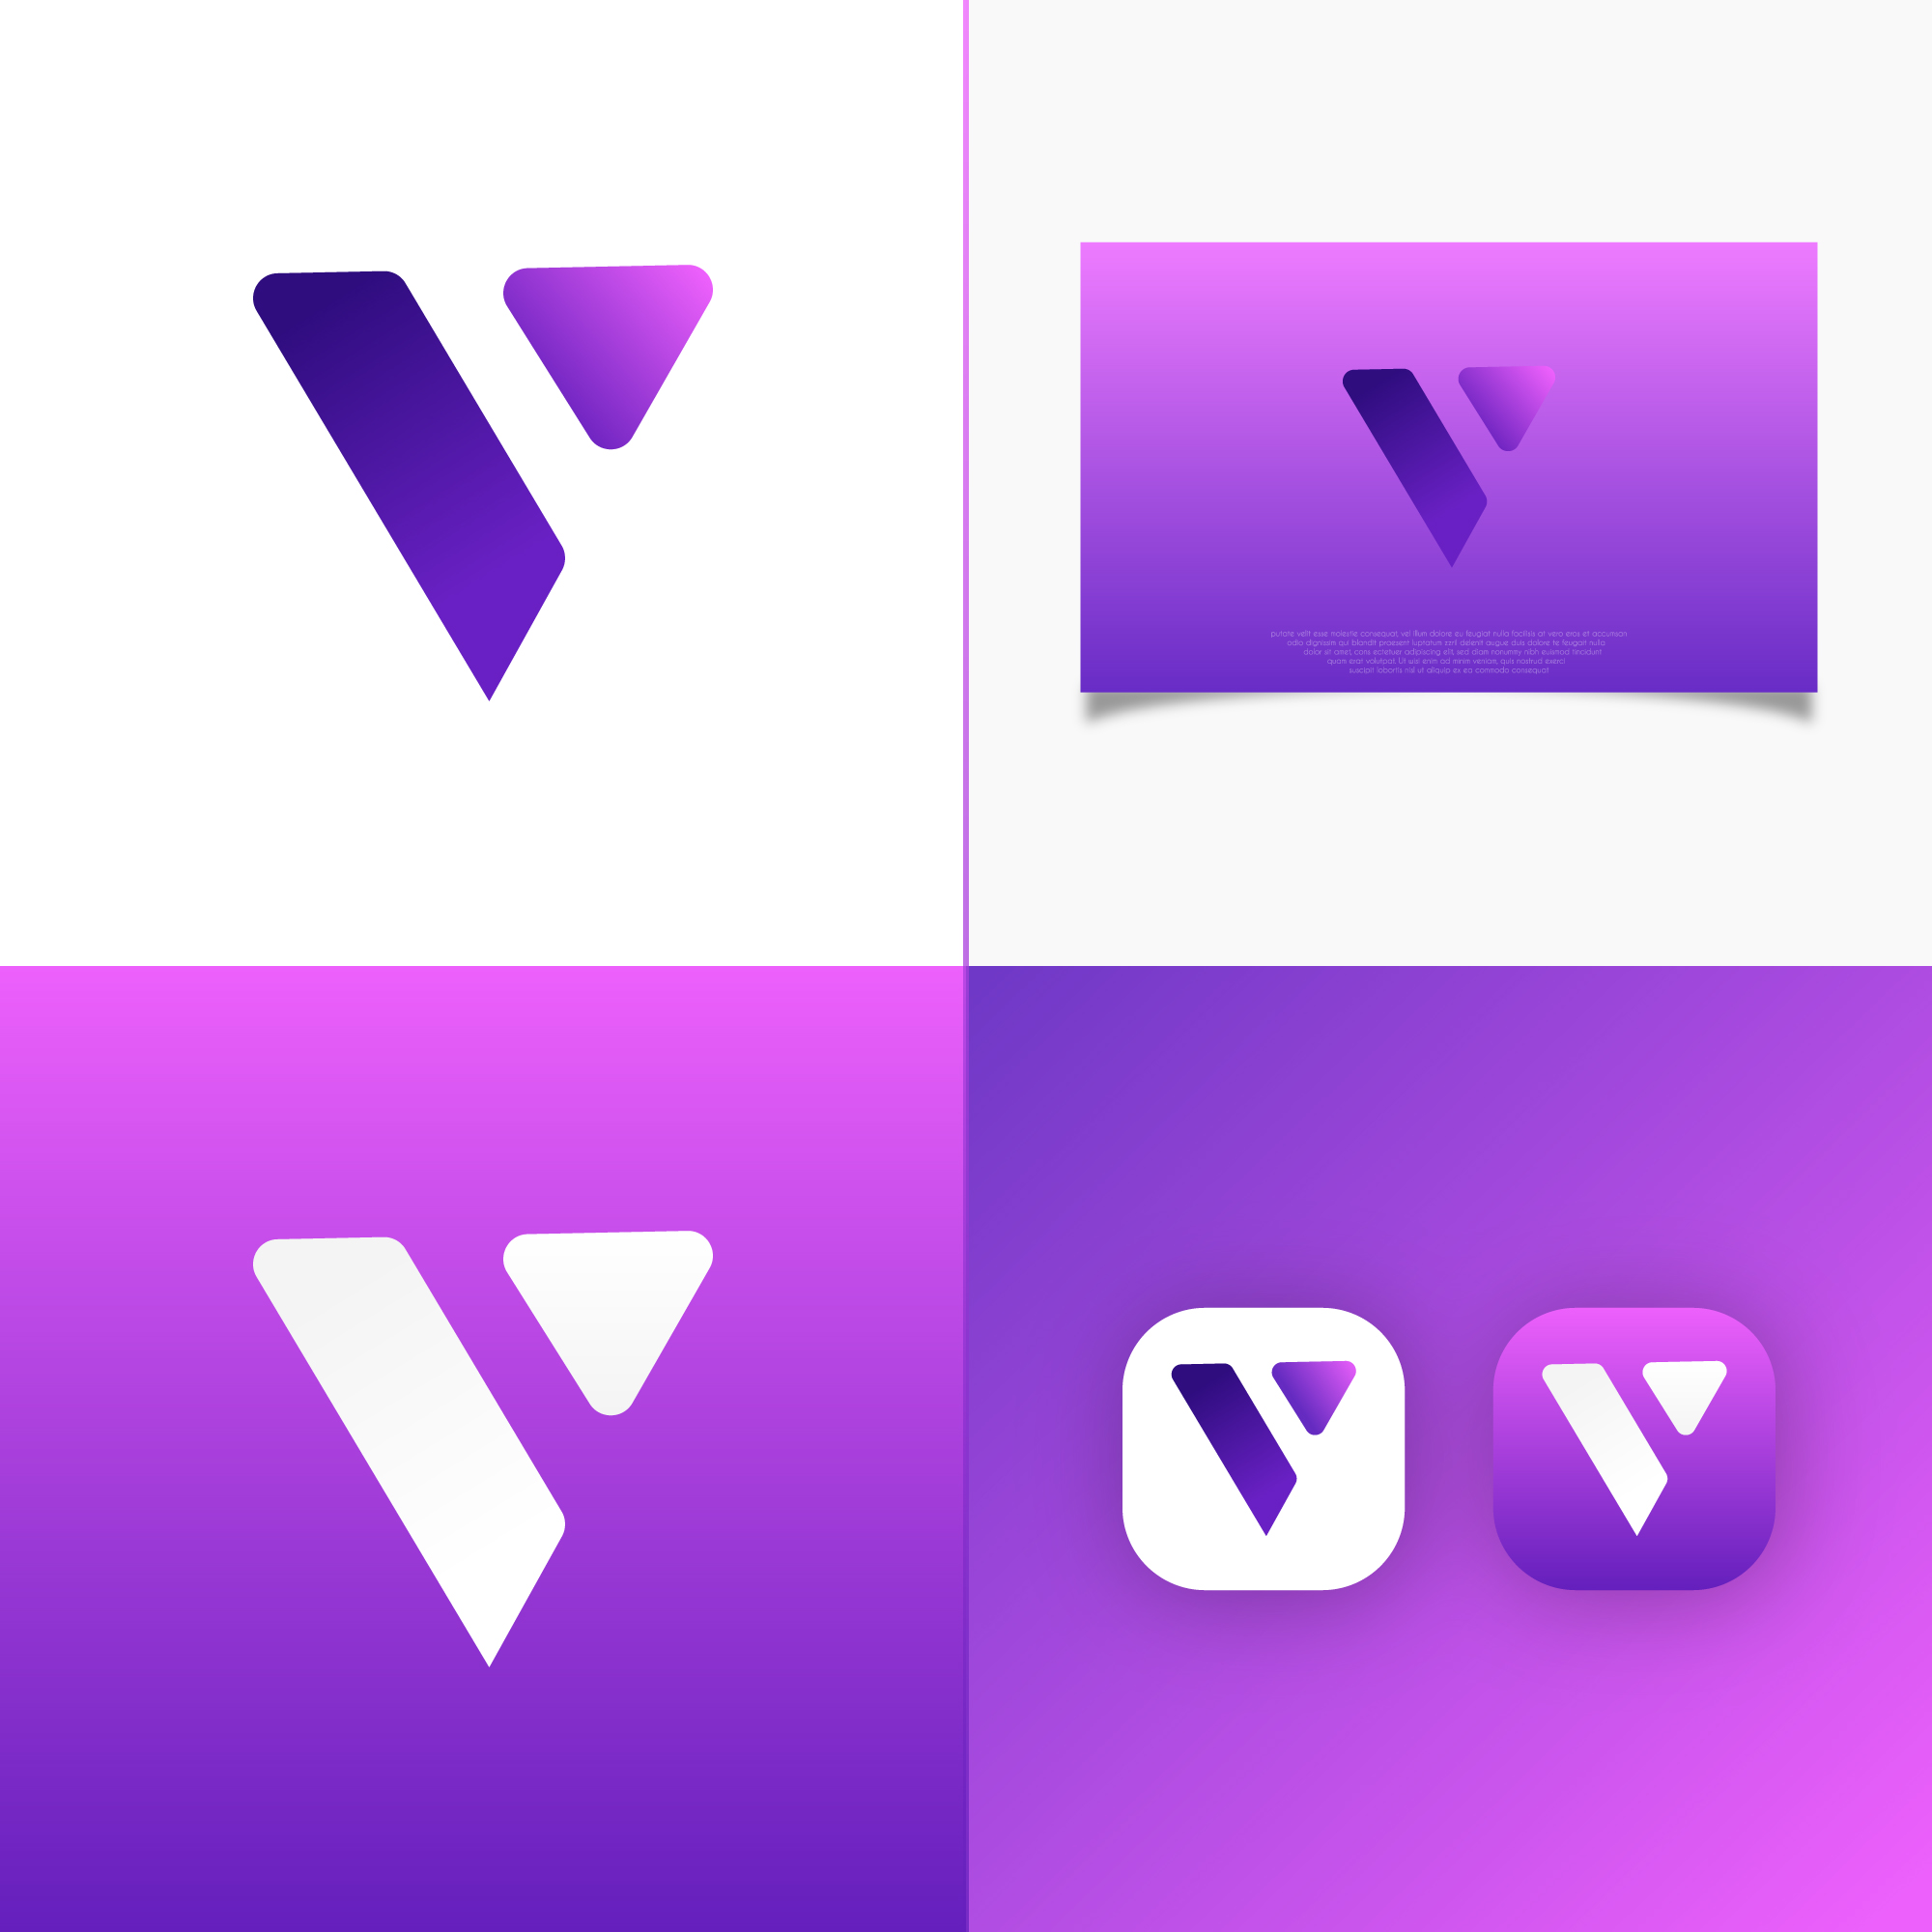 V letter Logo design cover image.